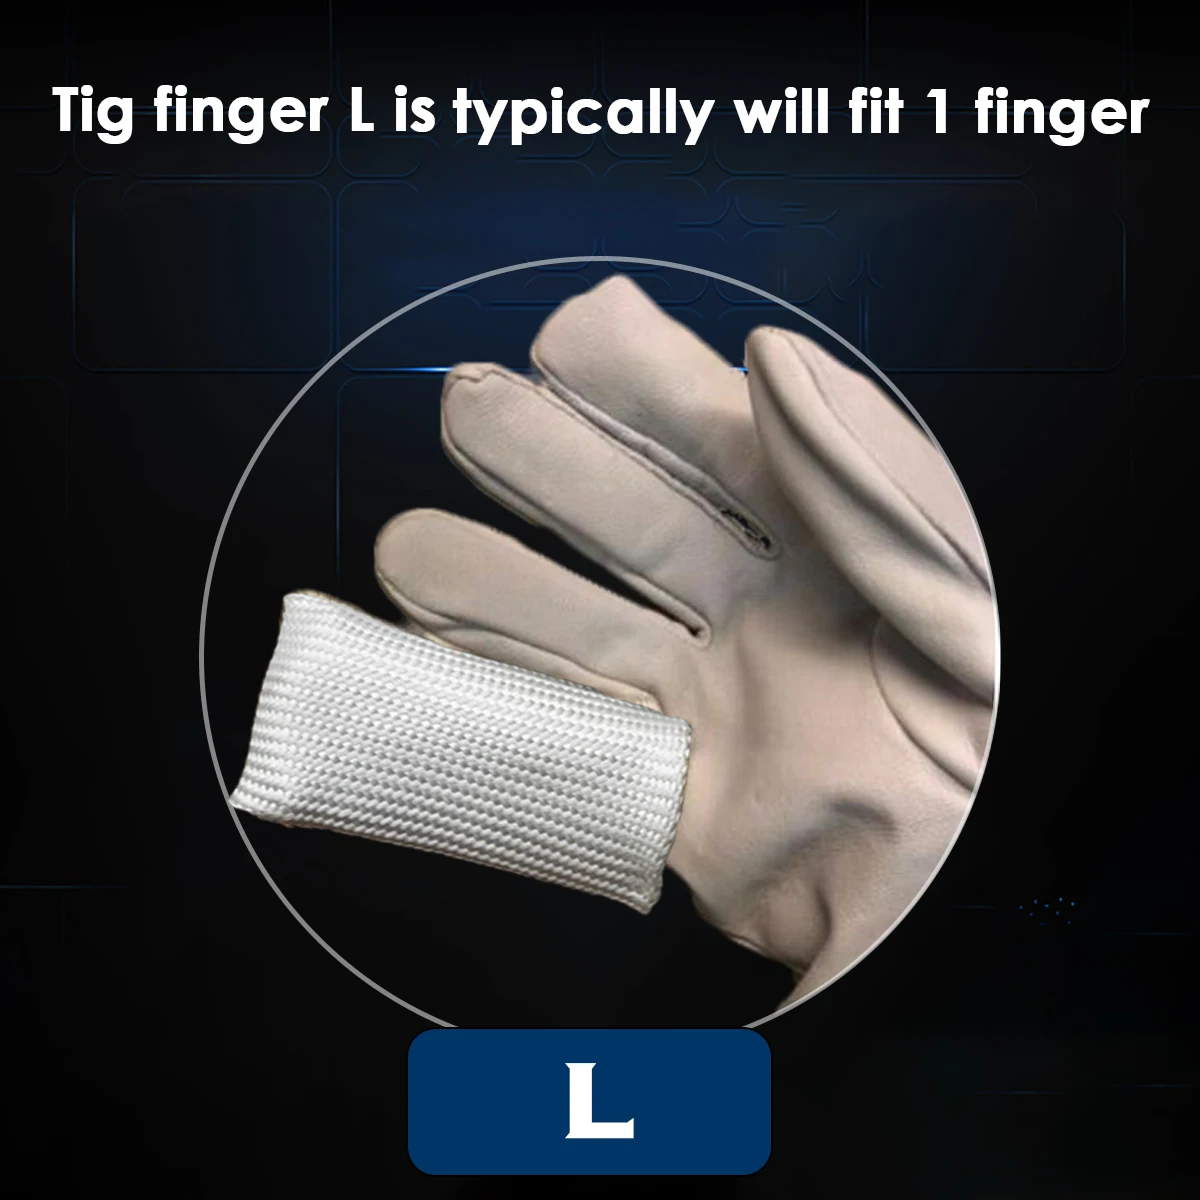 TIG Fingertips Heat Shield Guard Welding Gloves Finger Cover Guard X&XL Protect